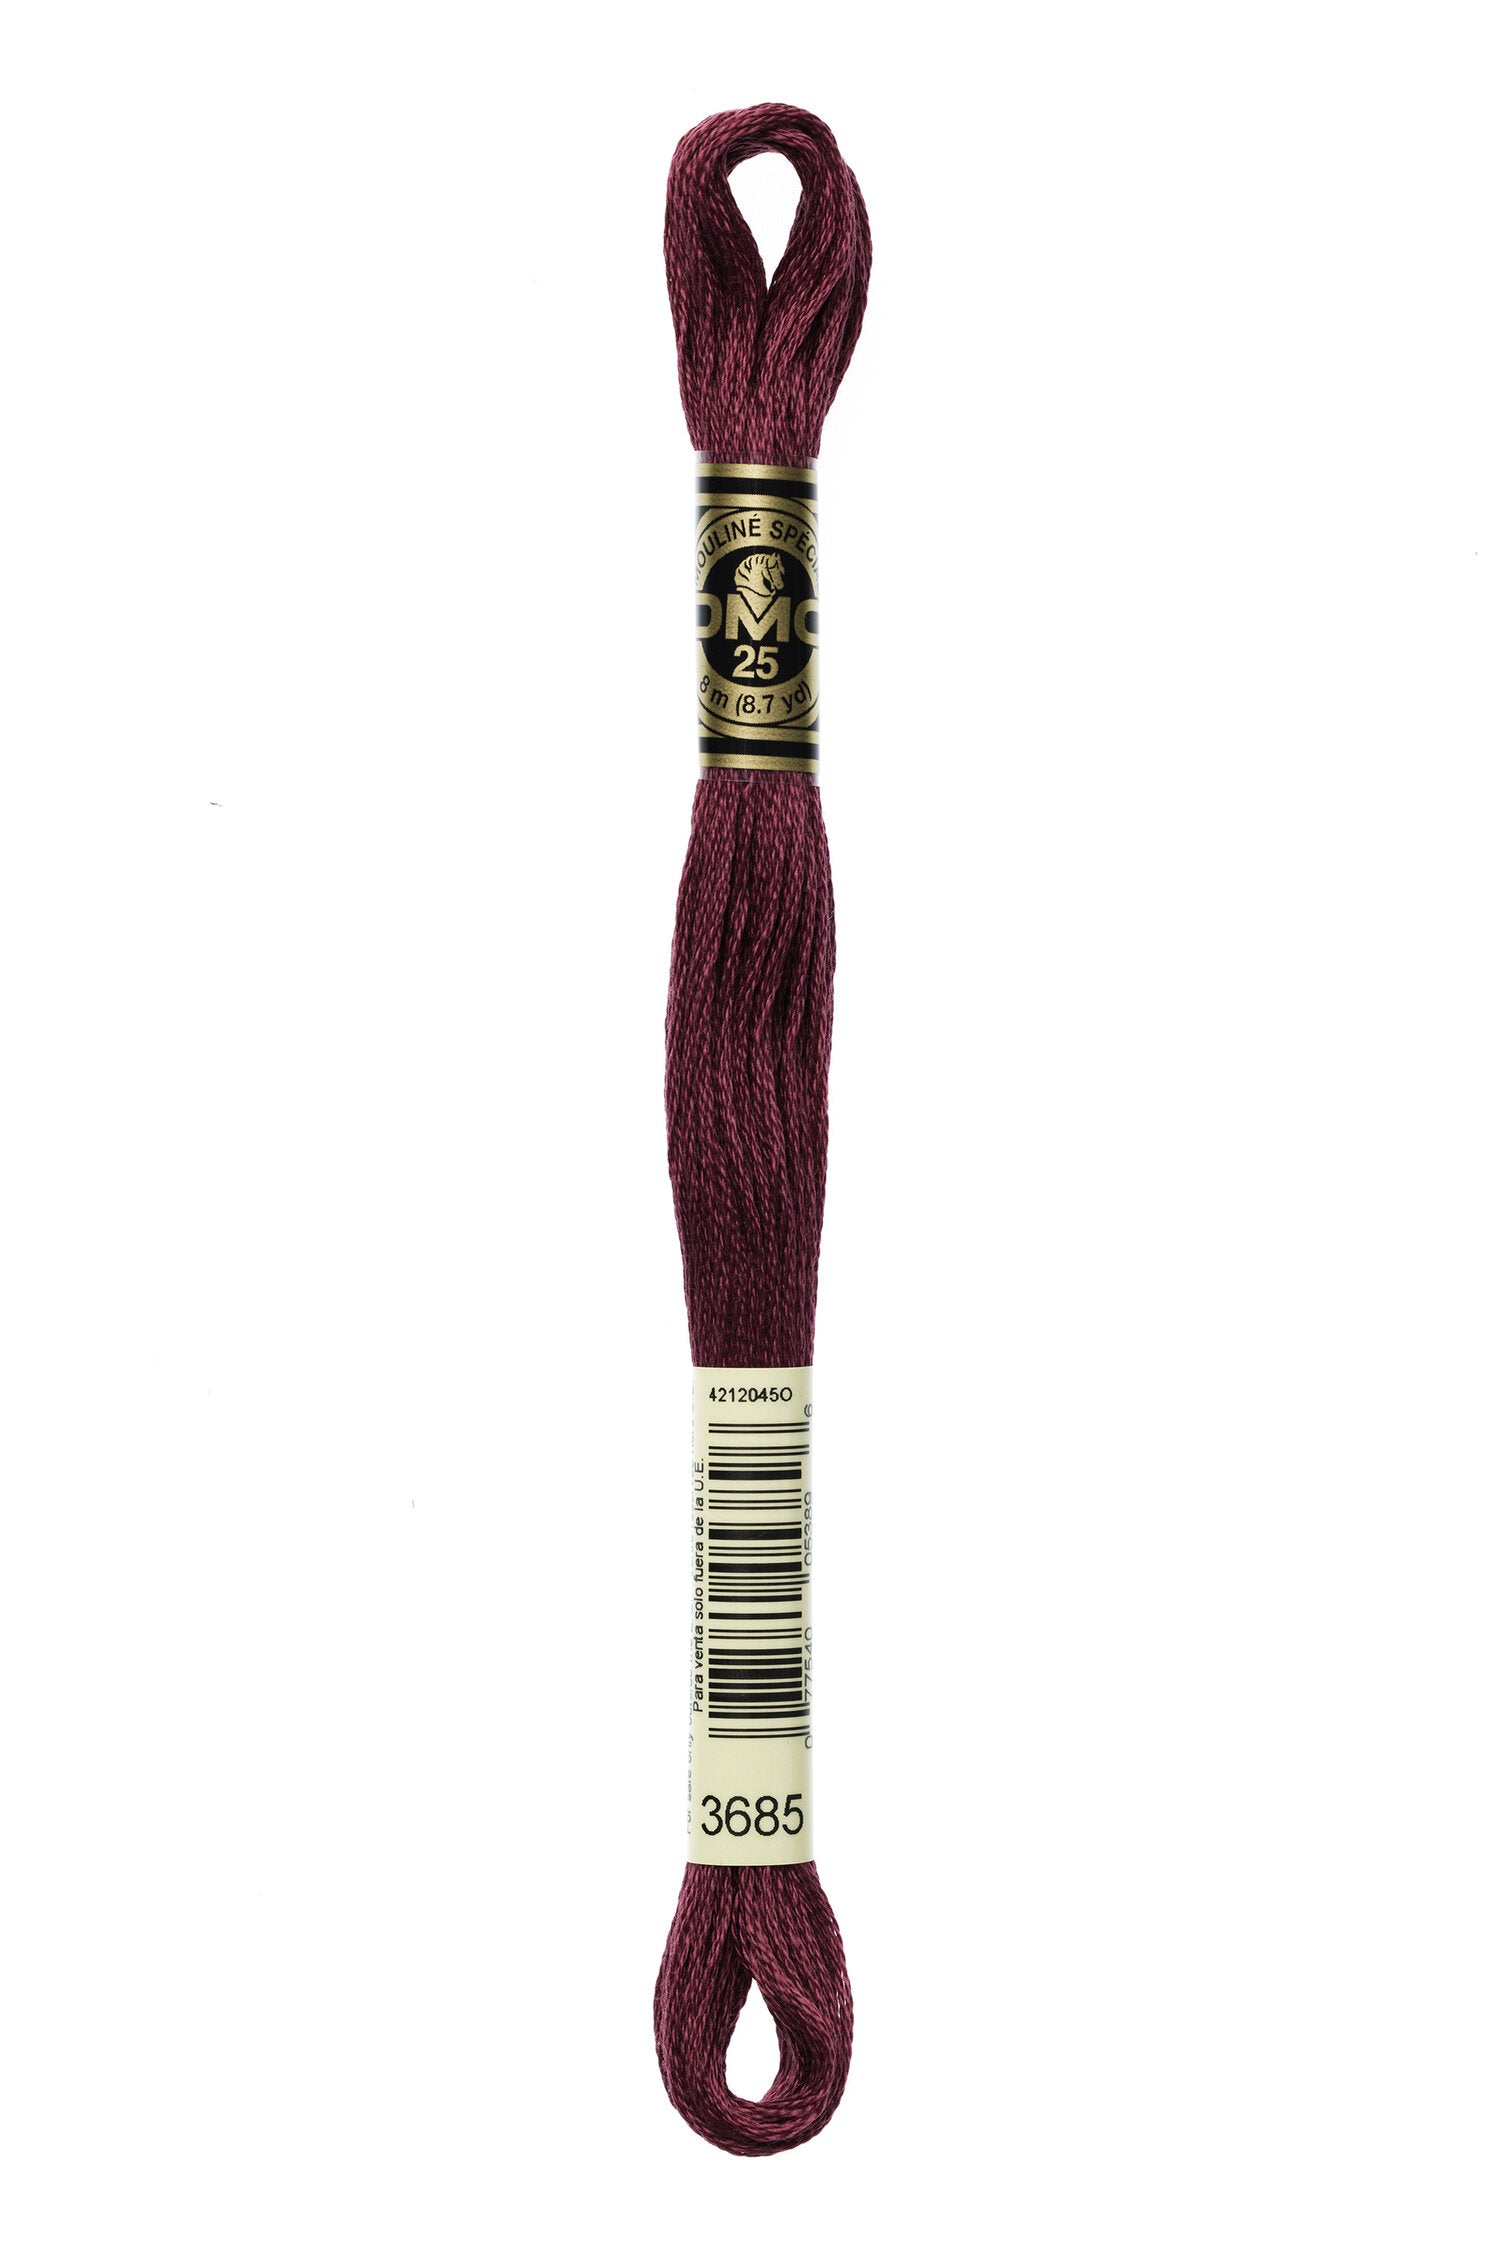 DMC 3685 - Mauve - Very Dark - DMC 6 Strand Embroidery Thread, Thread & Floss, Thread & Floss, The Crafty Grimalkin - A Cross Stitch Store